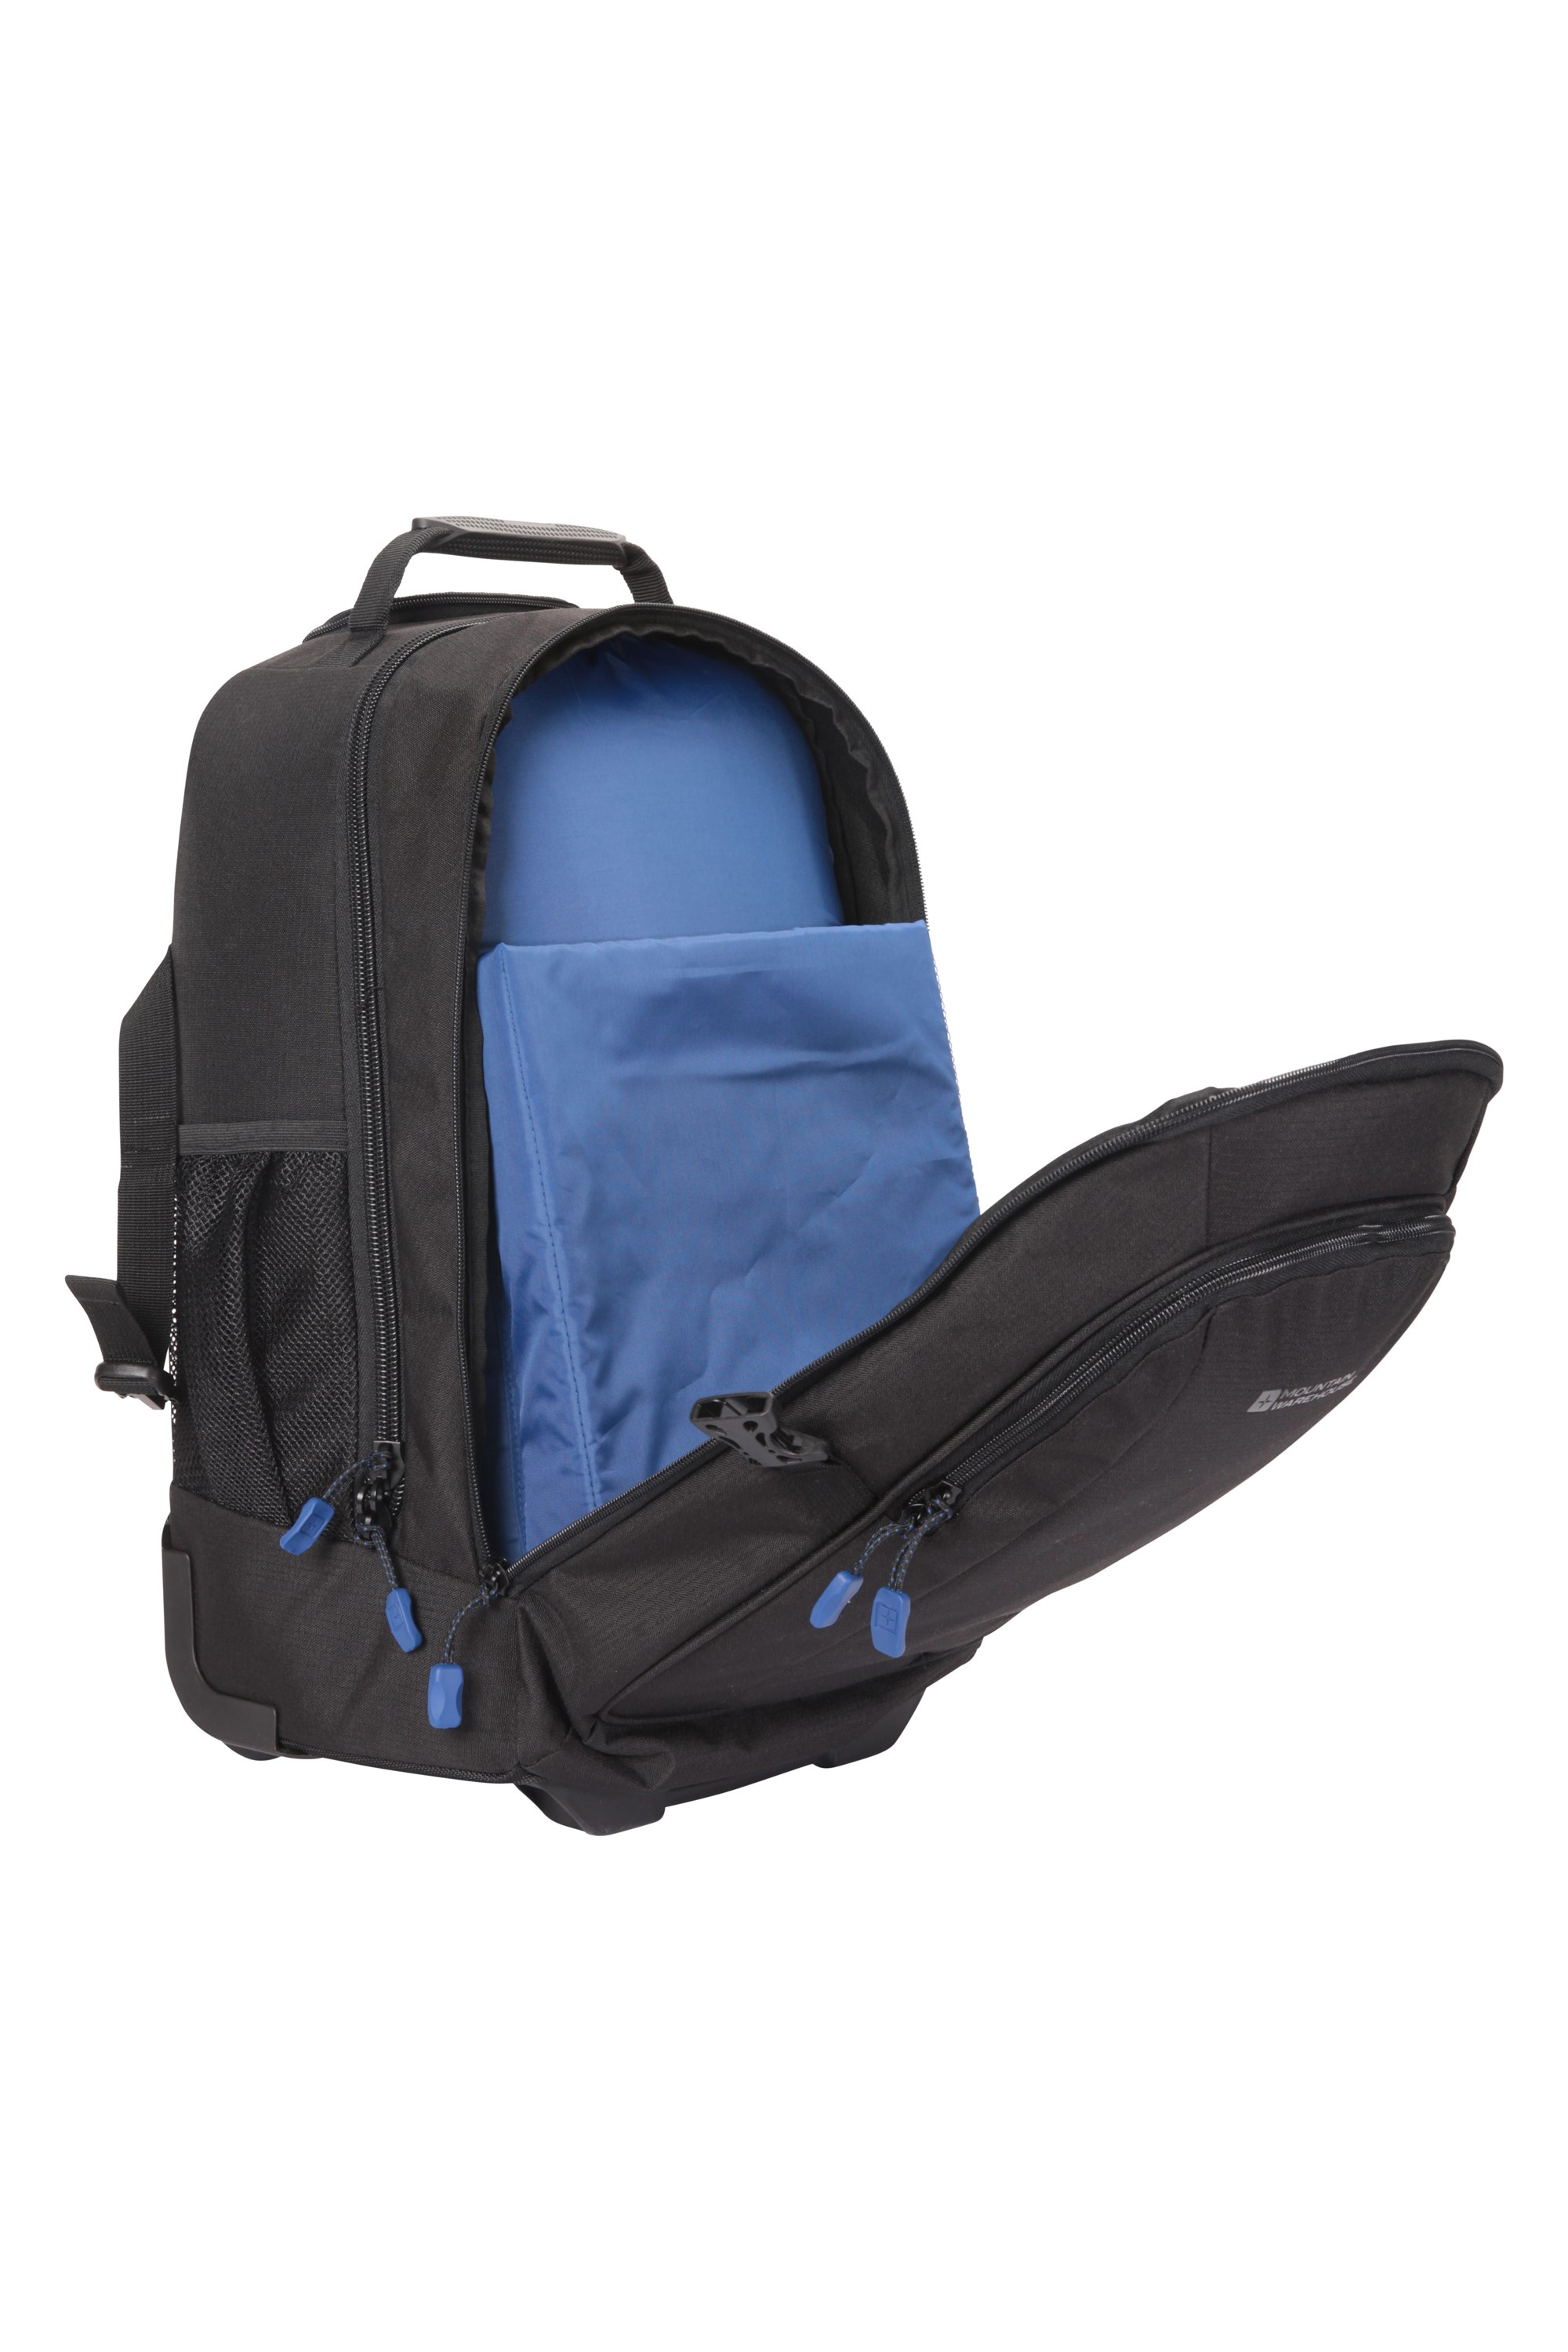 Mountain Warehouse Uni Voyager Rucksack Wheelie 35L Travel Bag